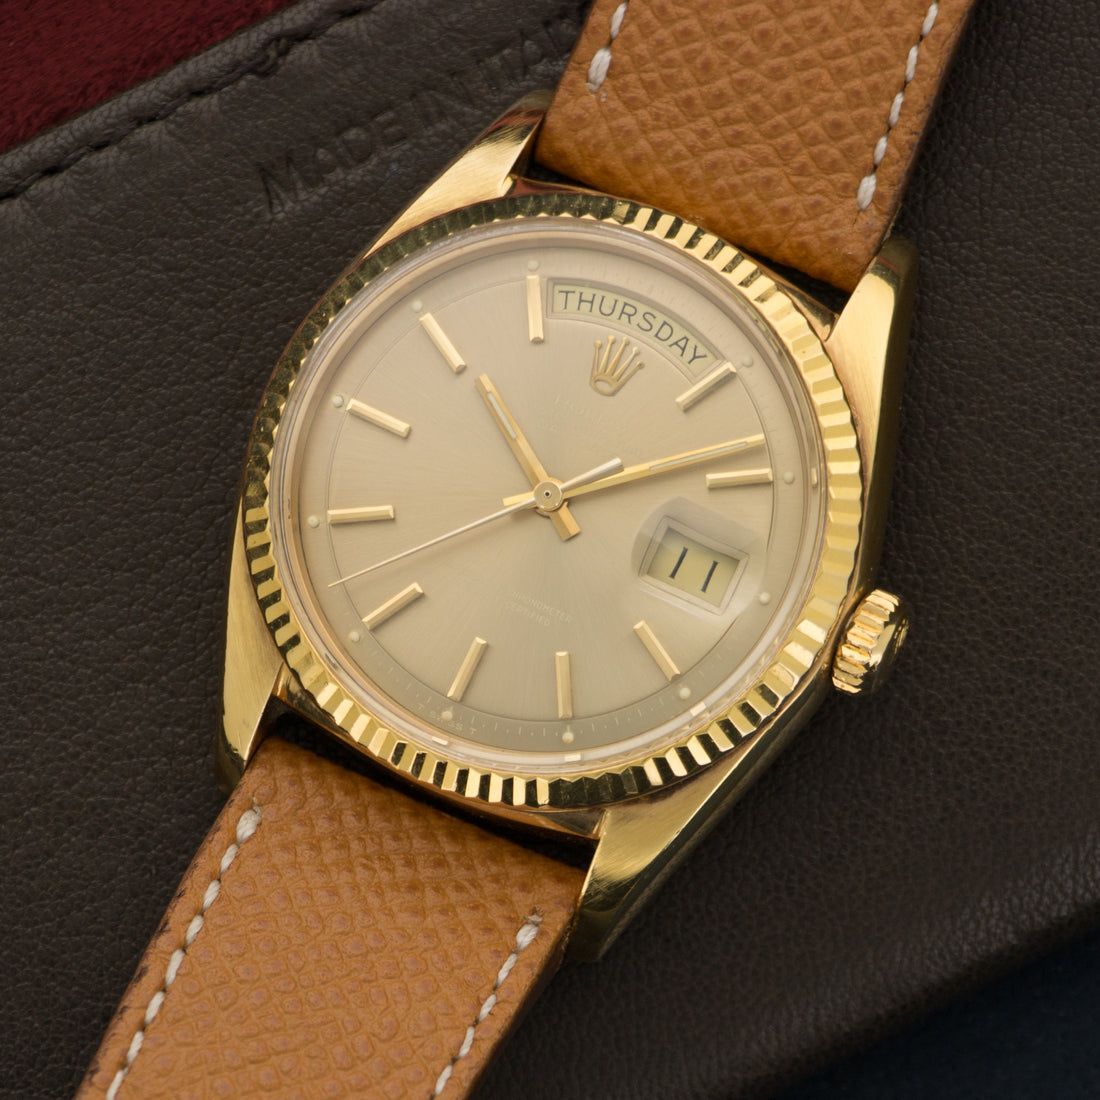 Rolex Yellow Gold Day-Date Watch Ref. 1803